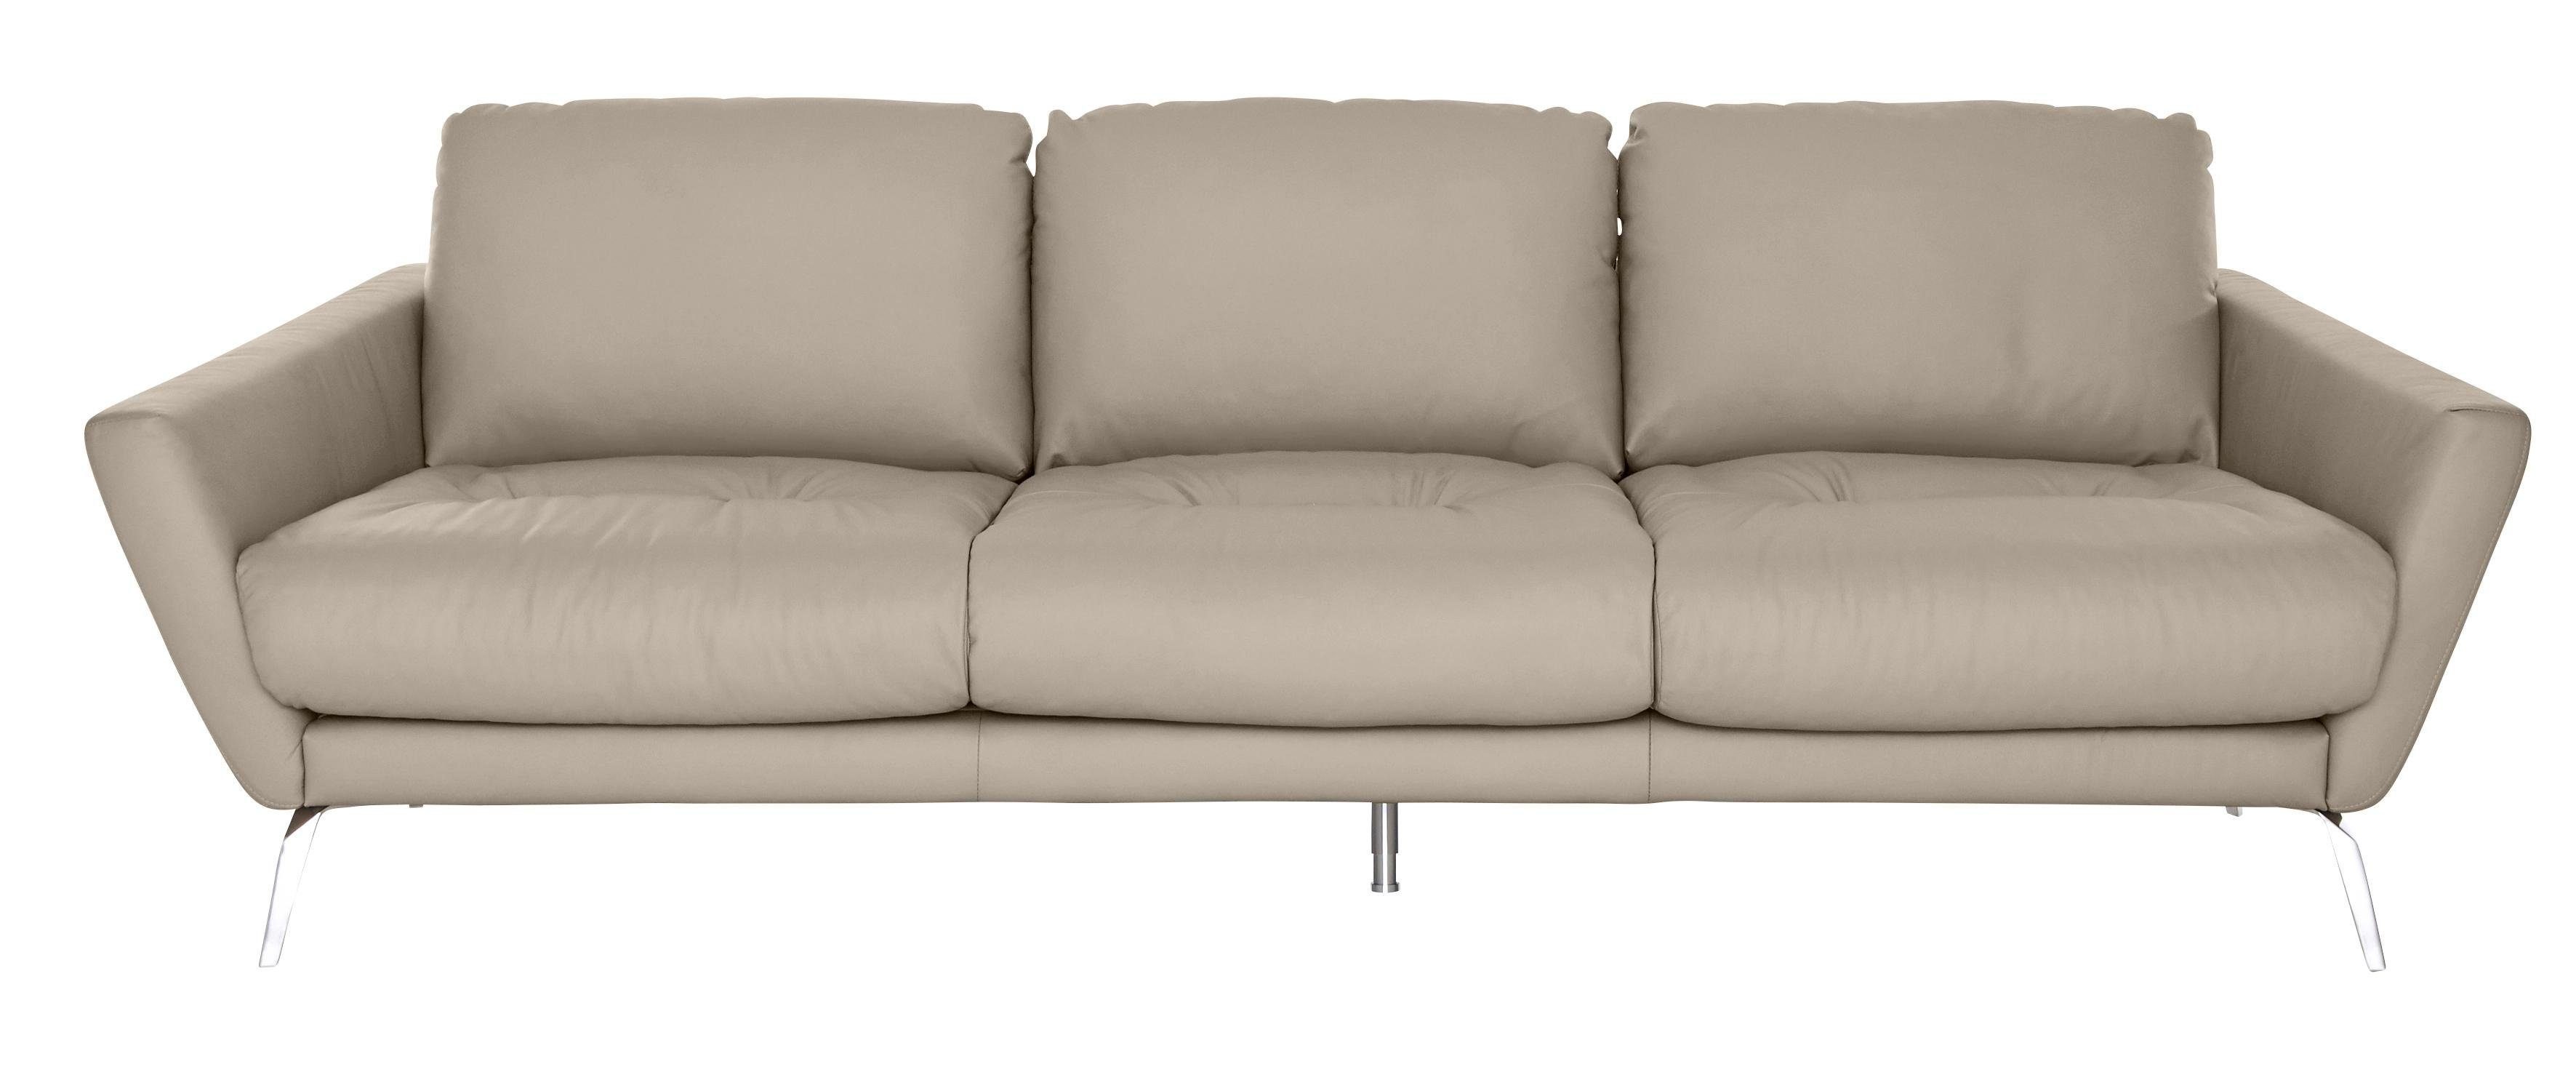 W.SCHILLIG Big-Sofa glänzend softy, Sitz, Heftung dekorativer im Chrom mit Füße